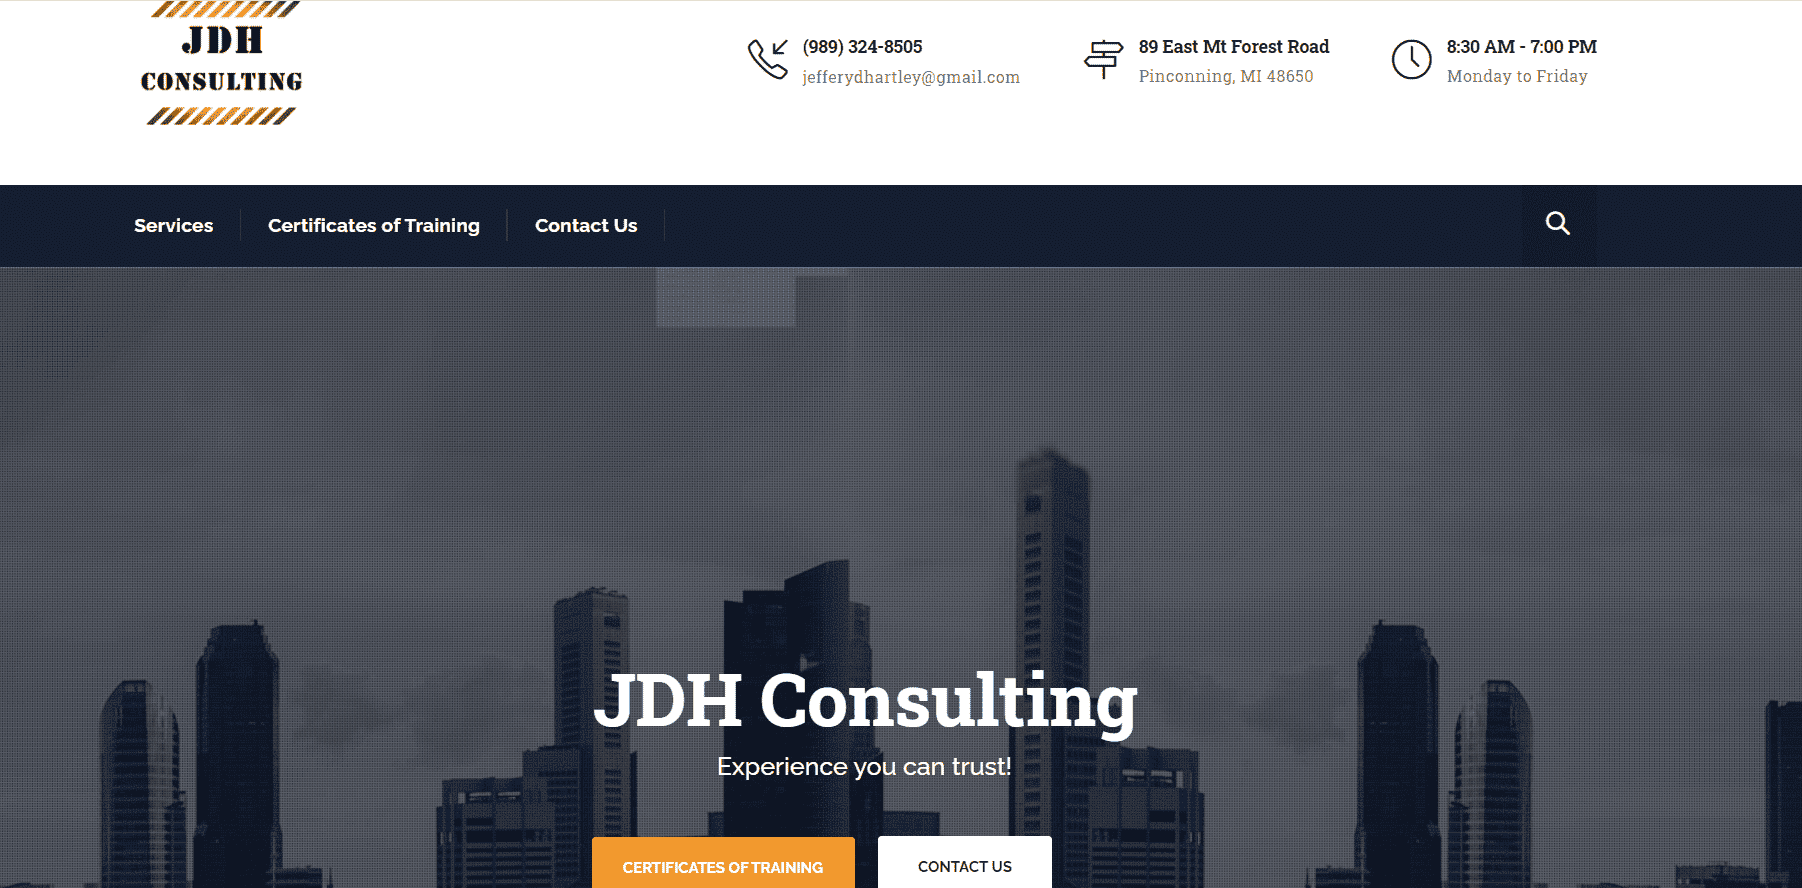 jdh consulting website screenshot